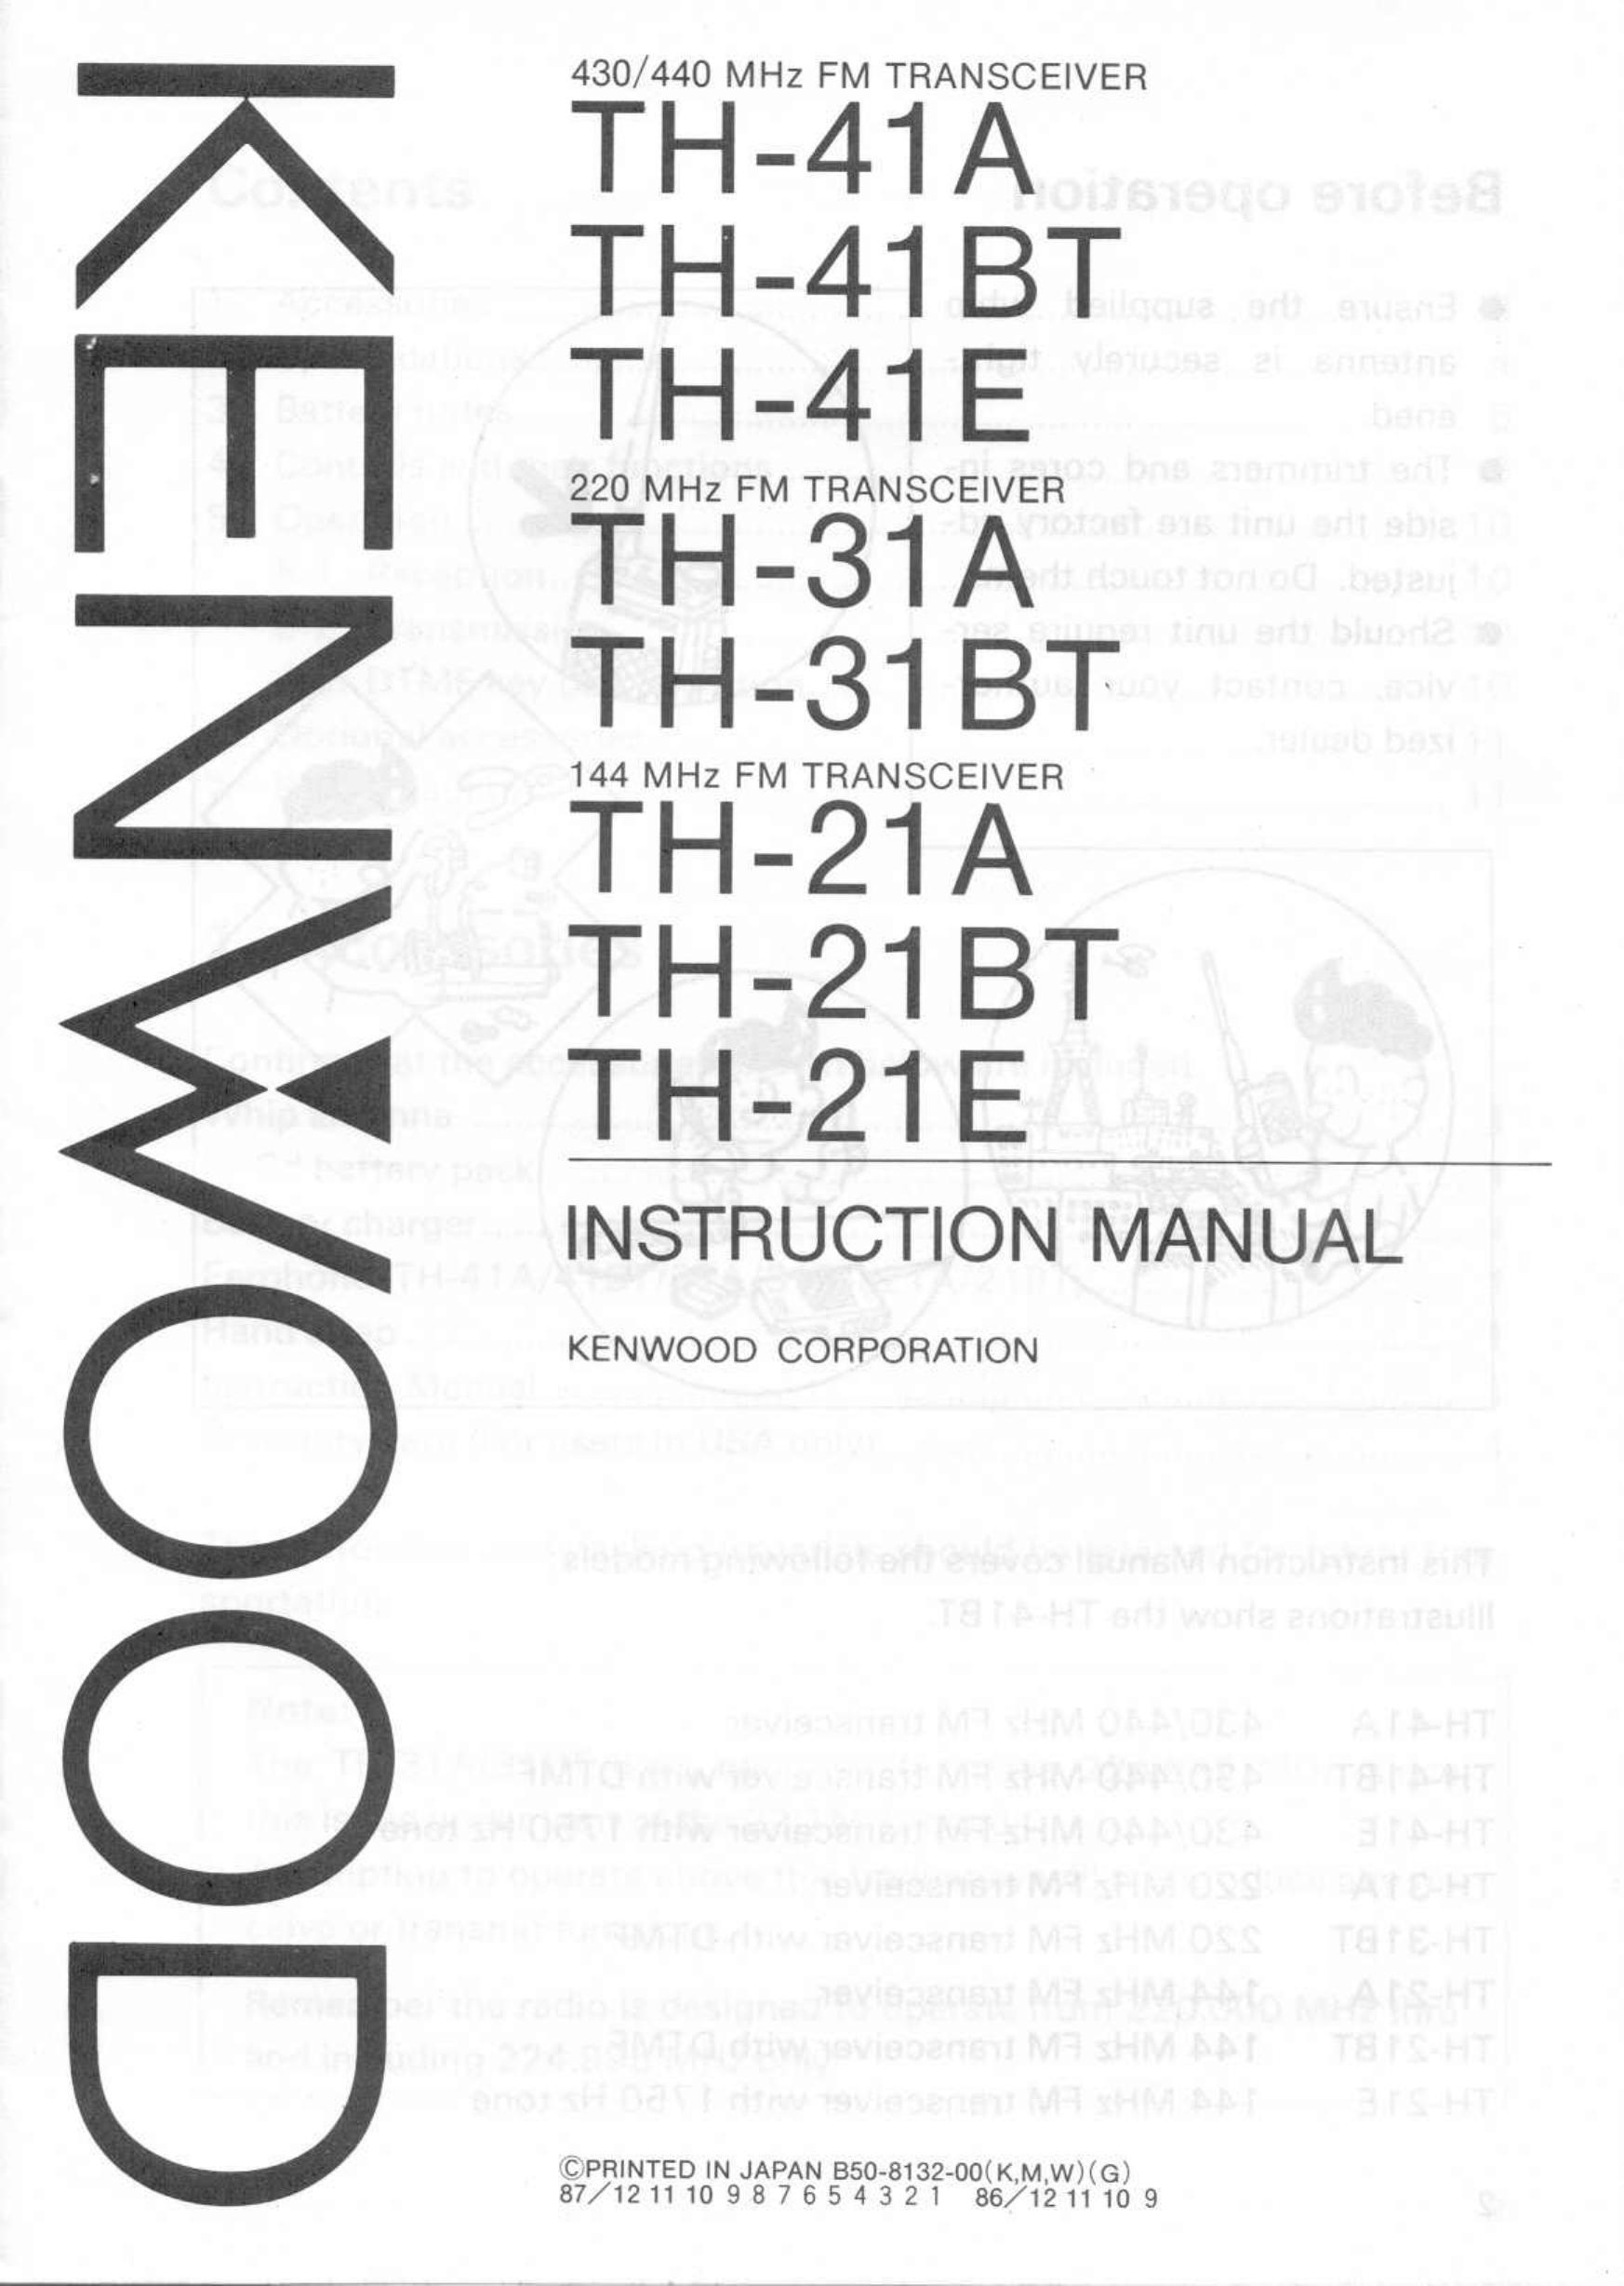 Kenwood TH-41A Marine Radio User Manual